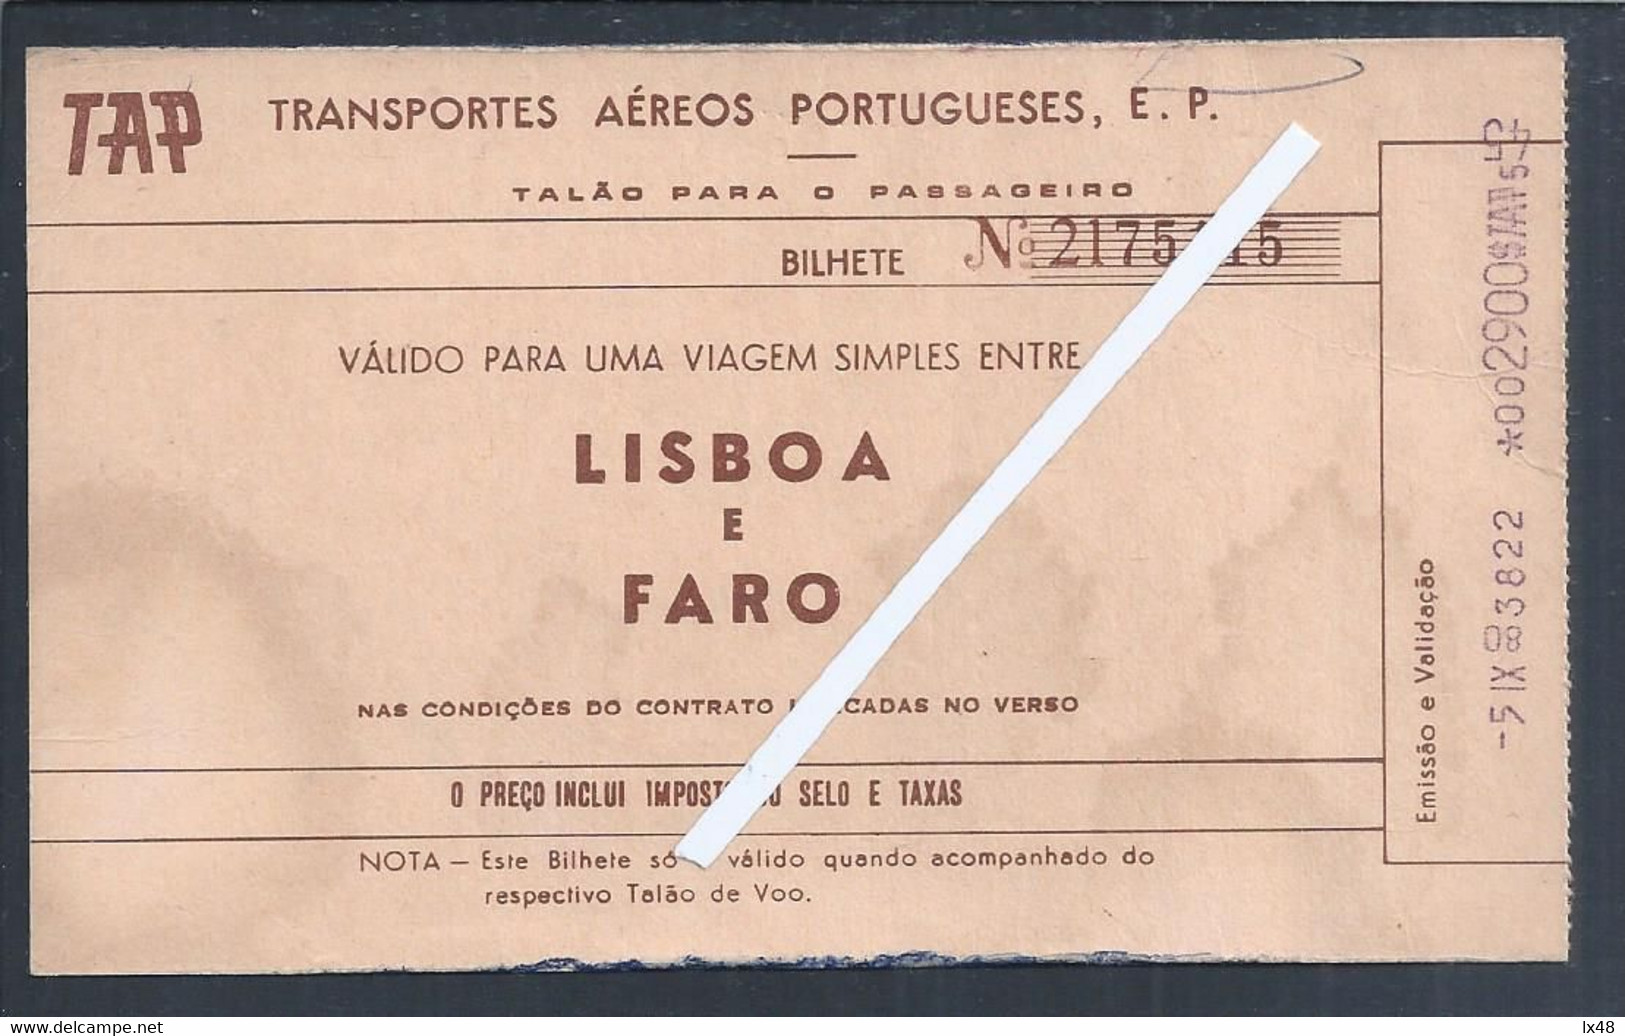 Ticket For TAP Transportes Aéreos Portugueses From Lisbon To Faro. TAP Transportes Aéreos Reiseticket Für Portugiesen Vo - Europa